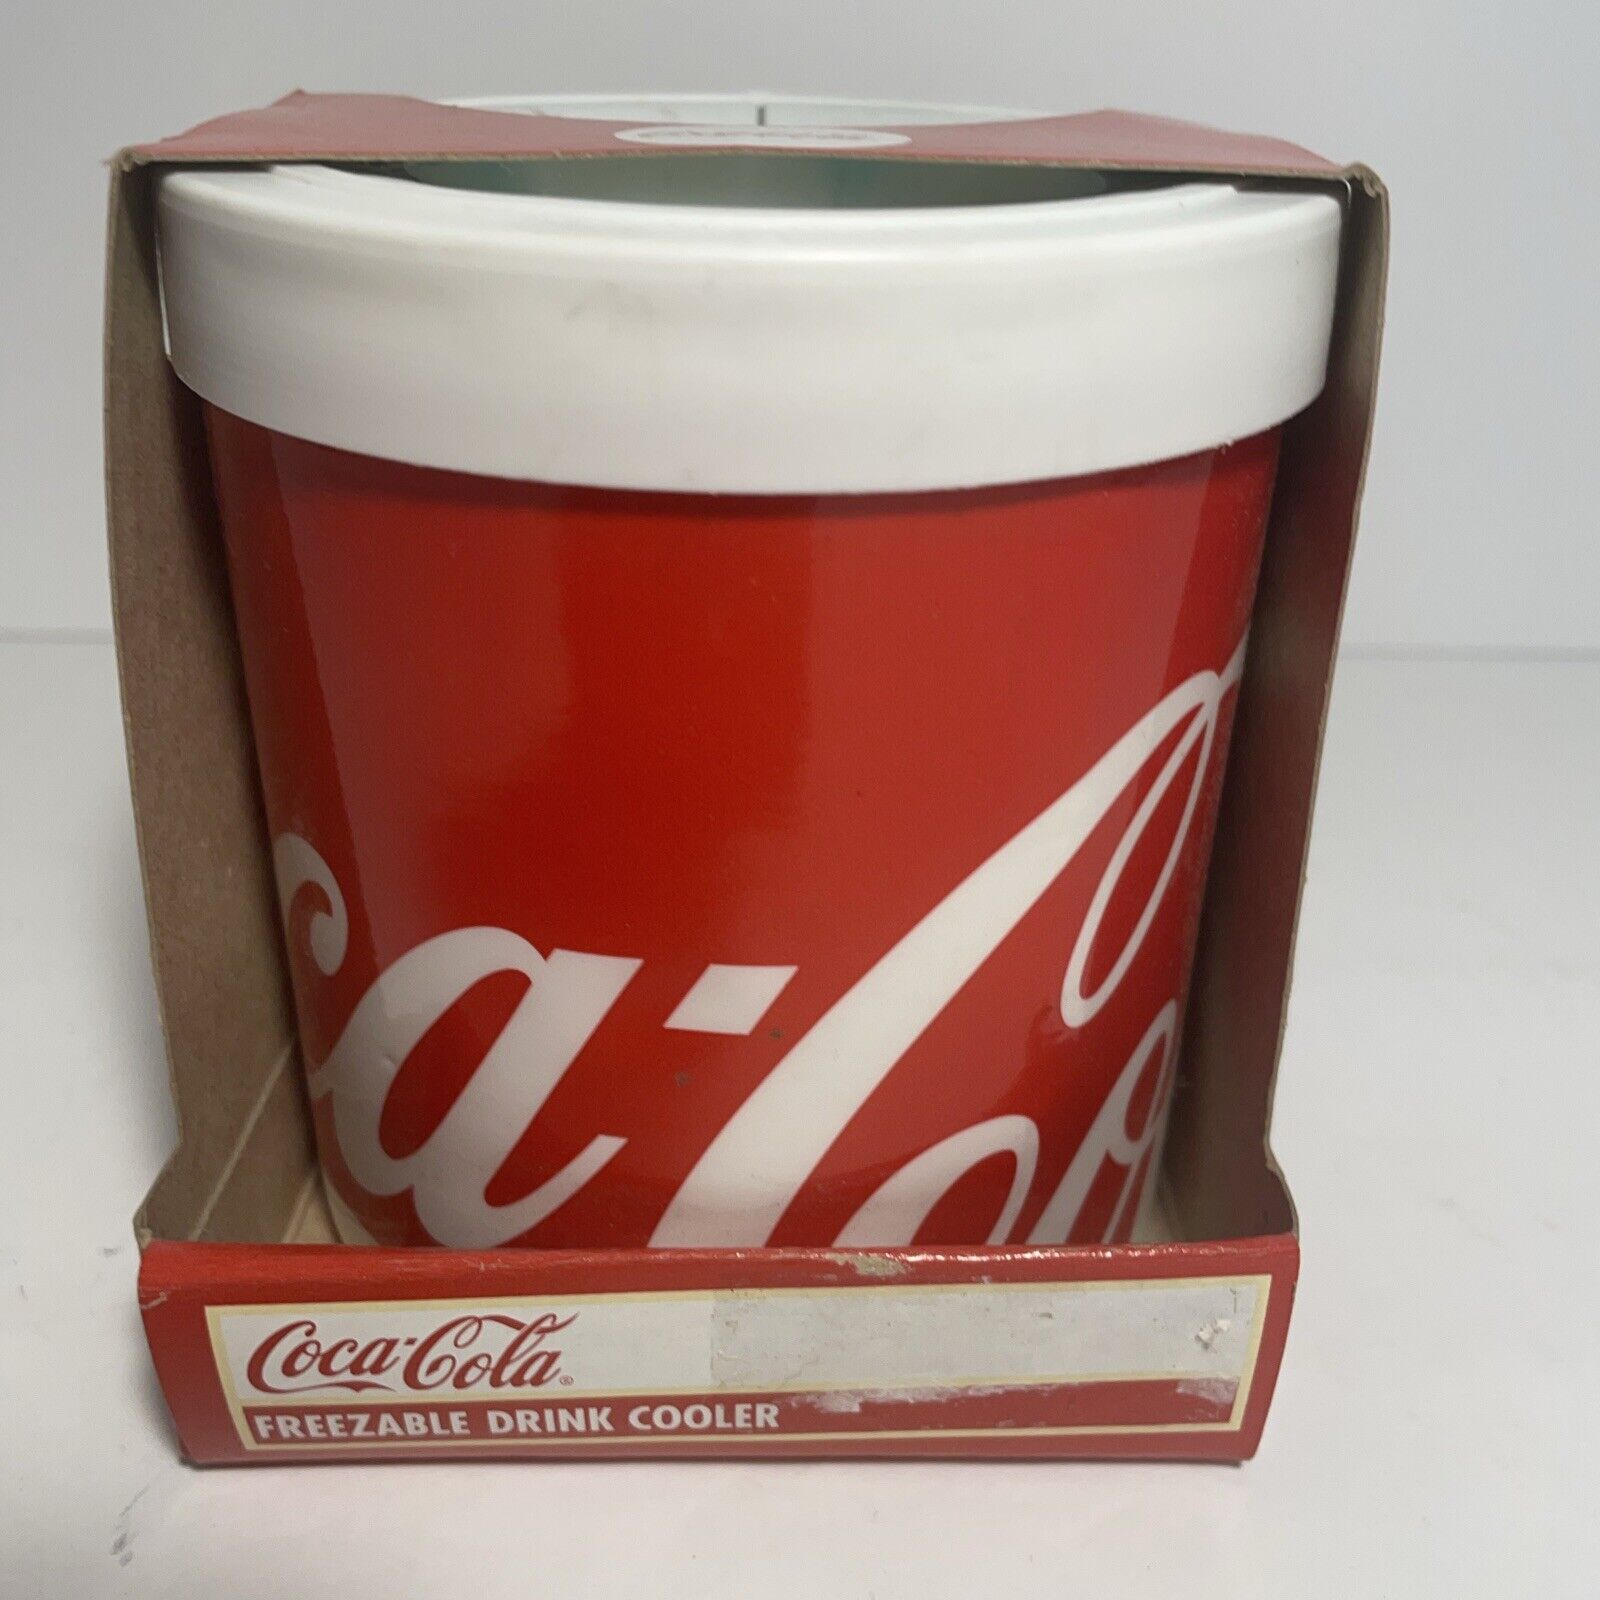 NOS Vintage Coca-Cola Freezable Drink Cooler Coke USA